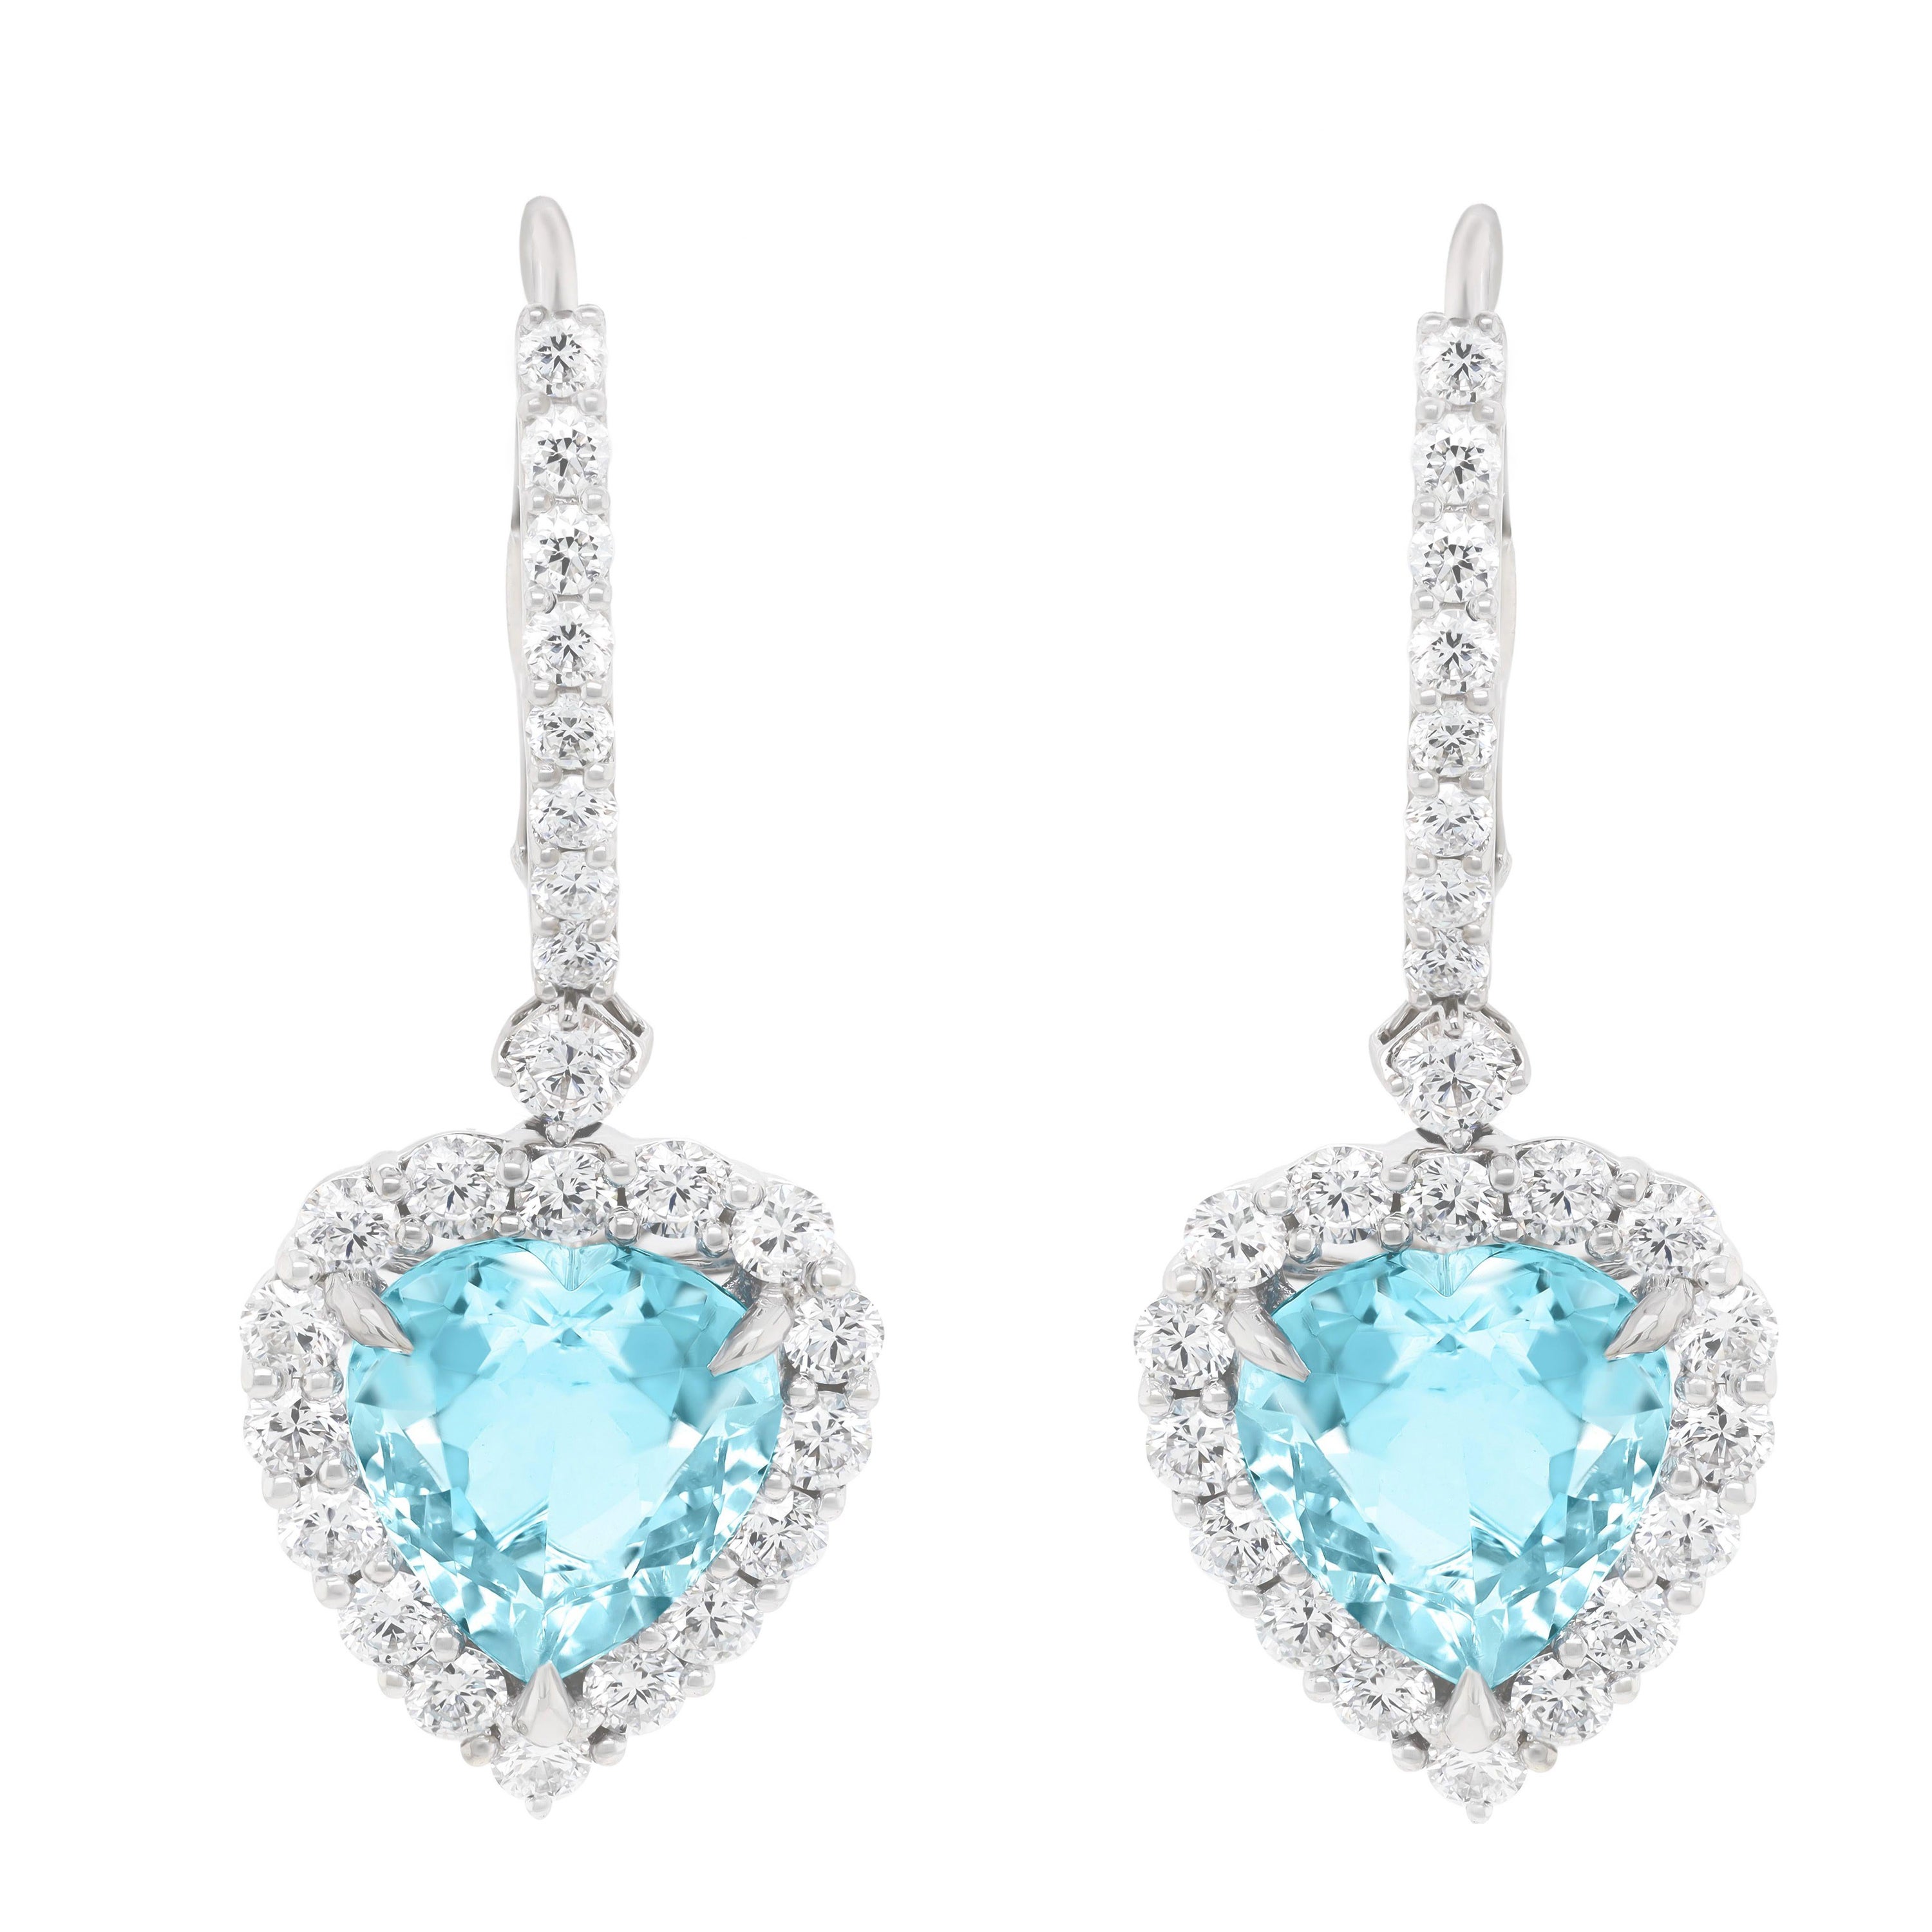 Diana M. 7.70 Carat Aquamarine Heart Center Stone Earrings For Sale